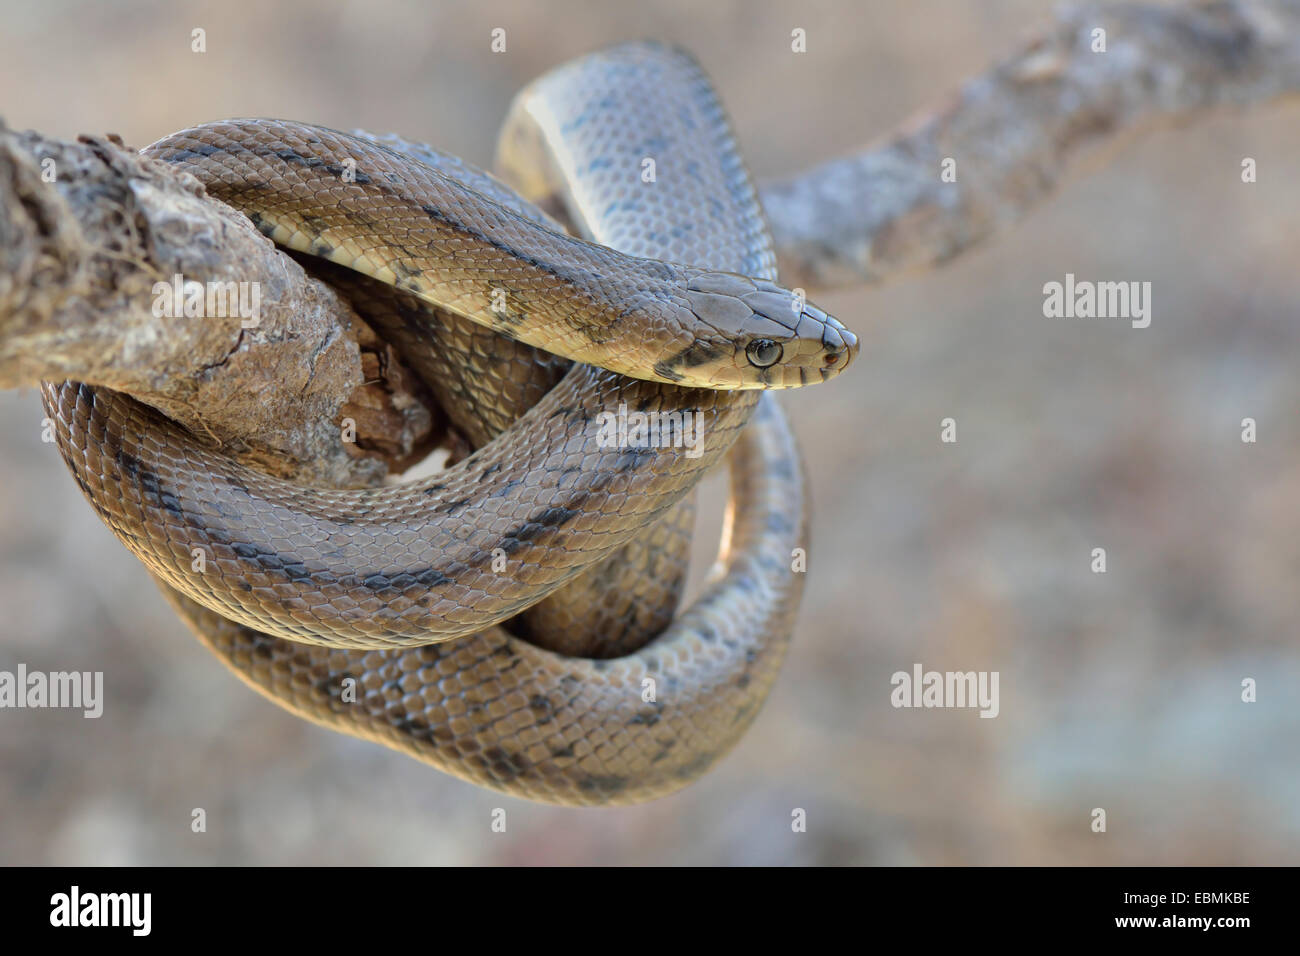 Ladder snake (Rhinechis scalaris), wrapped around tree branch, Iberian Peninsula, Algarve, Portugal, Europe Stock Photo